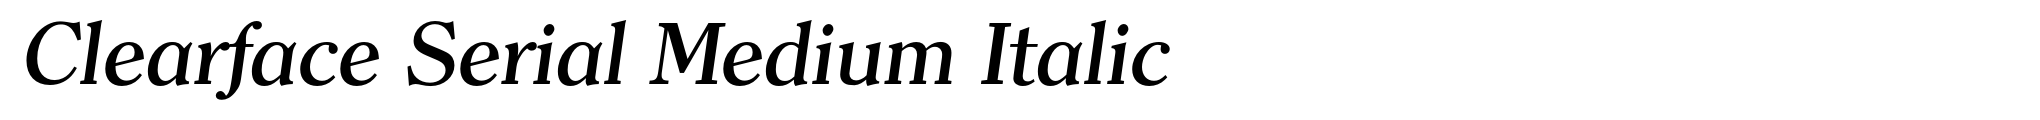 Clearface Serial Medium Italic image